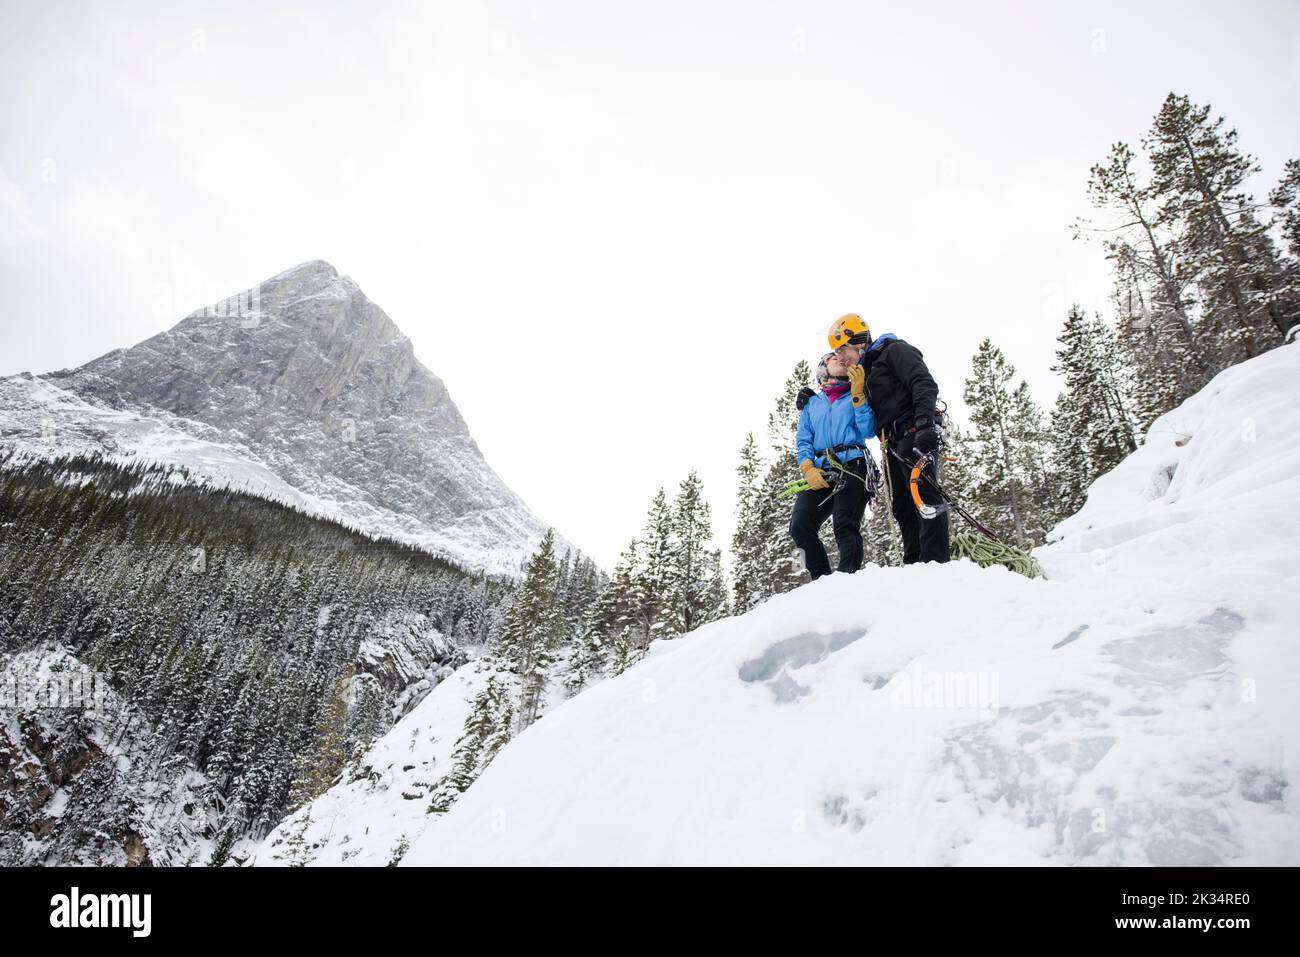 Ice climbers kissing on peak of snowy mountain Stock Photo